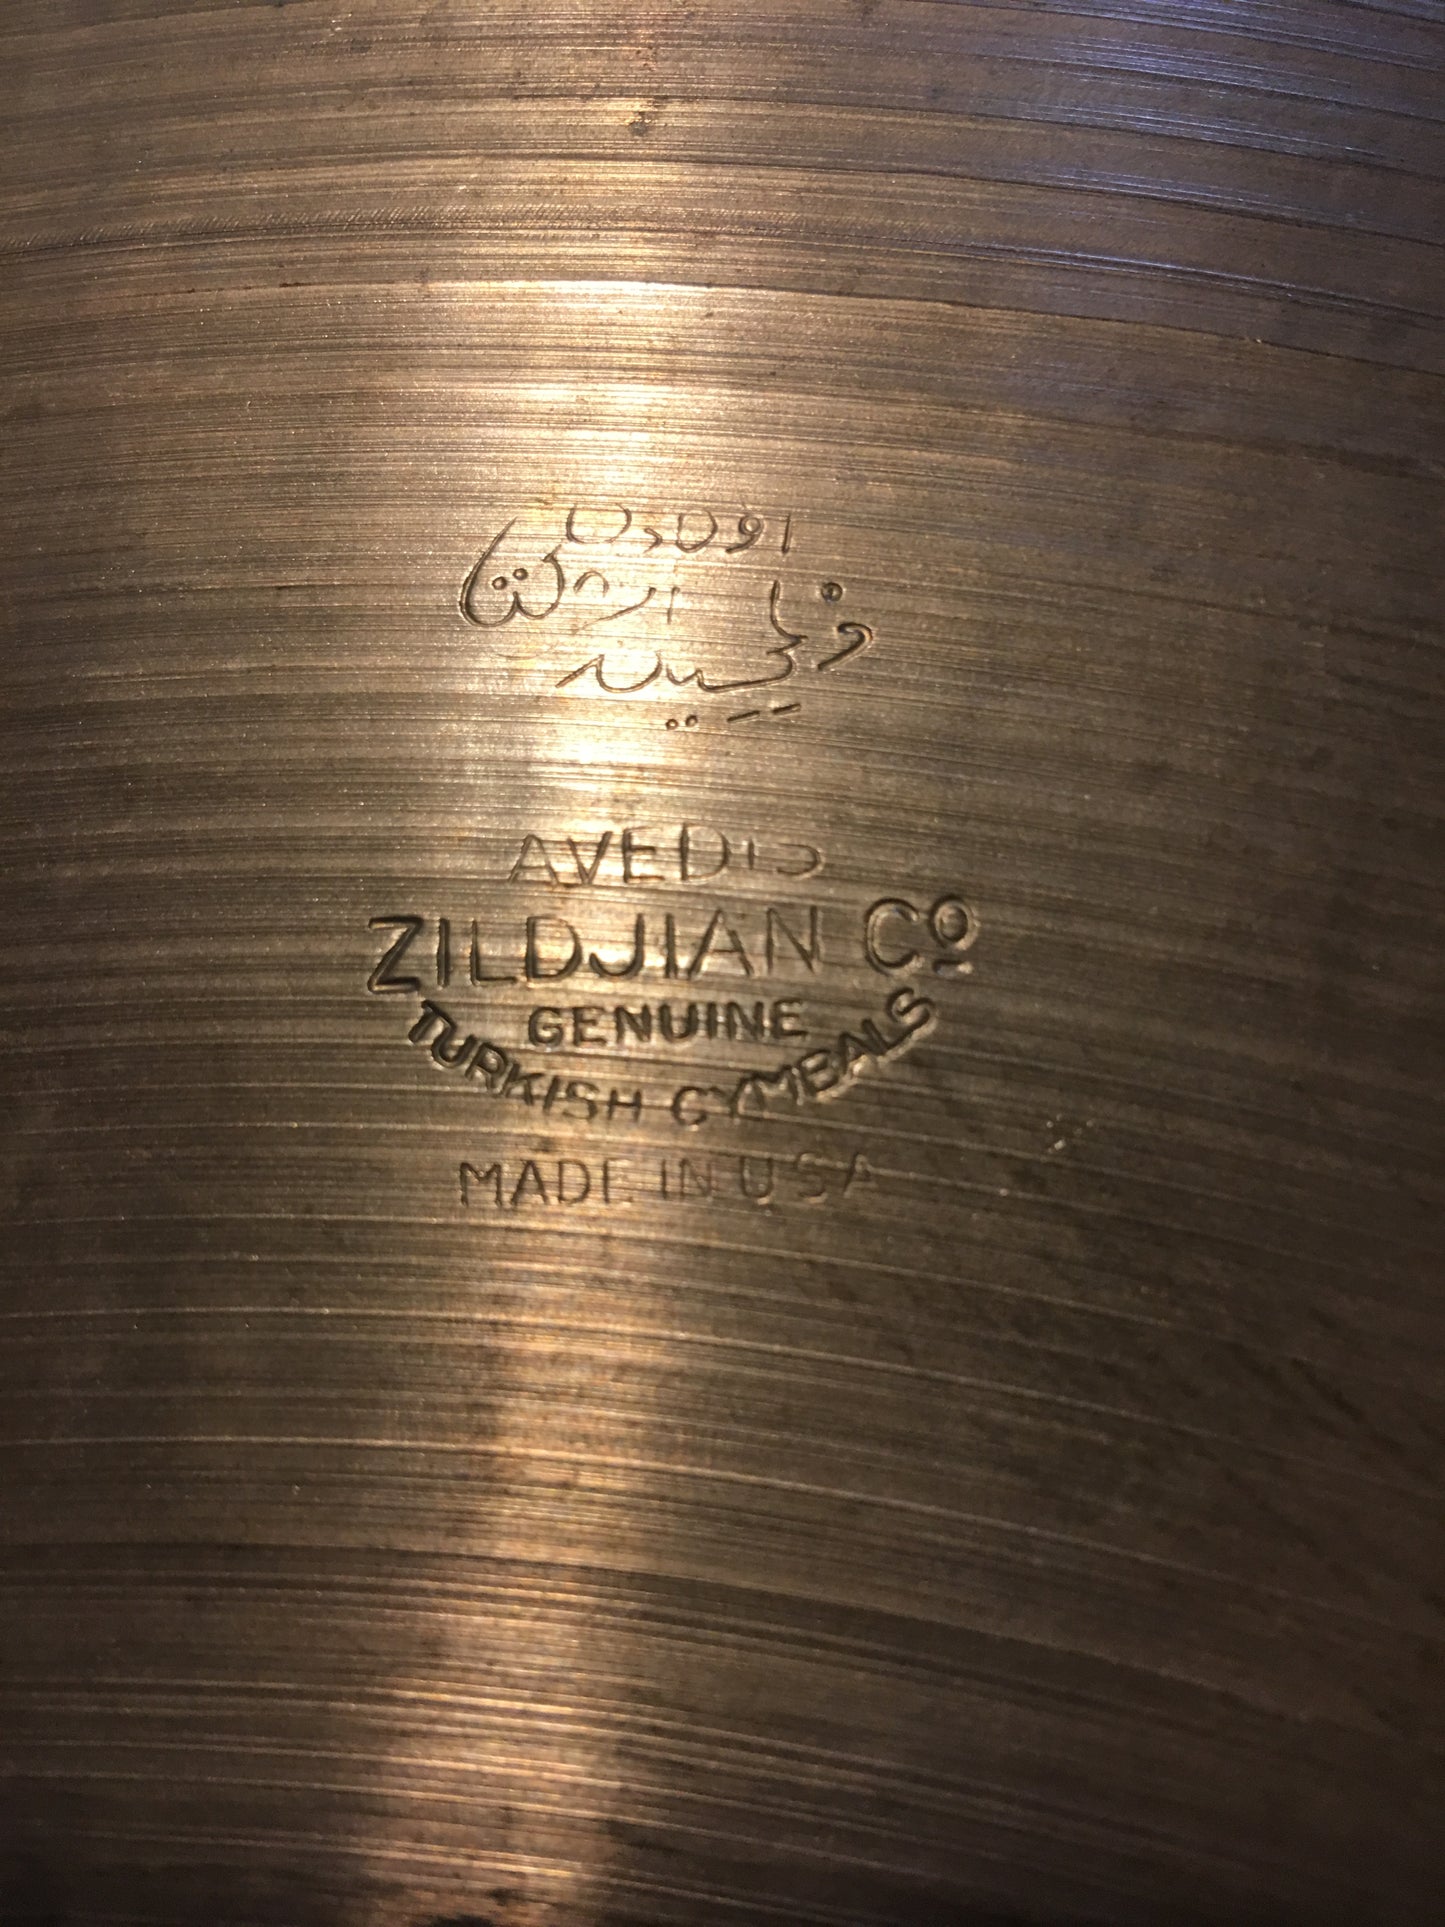 20" Zildjian A Early '50s Trans Stamp Ride Cymbal 2164g #515